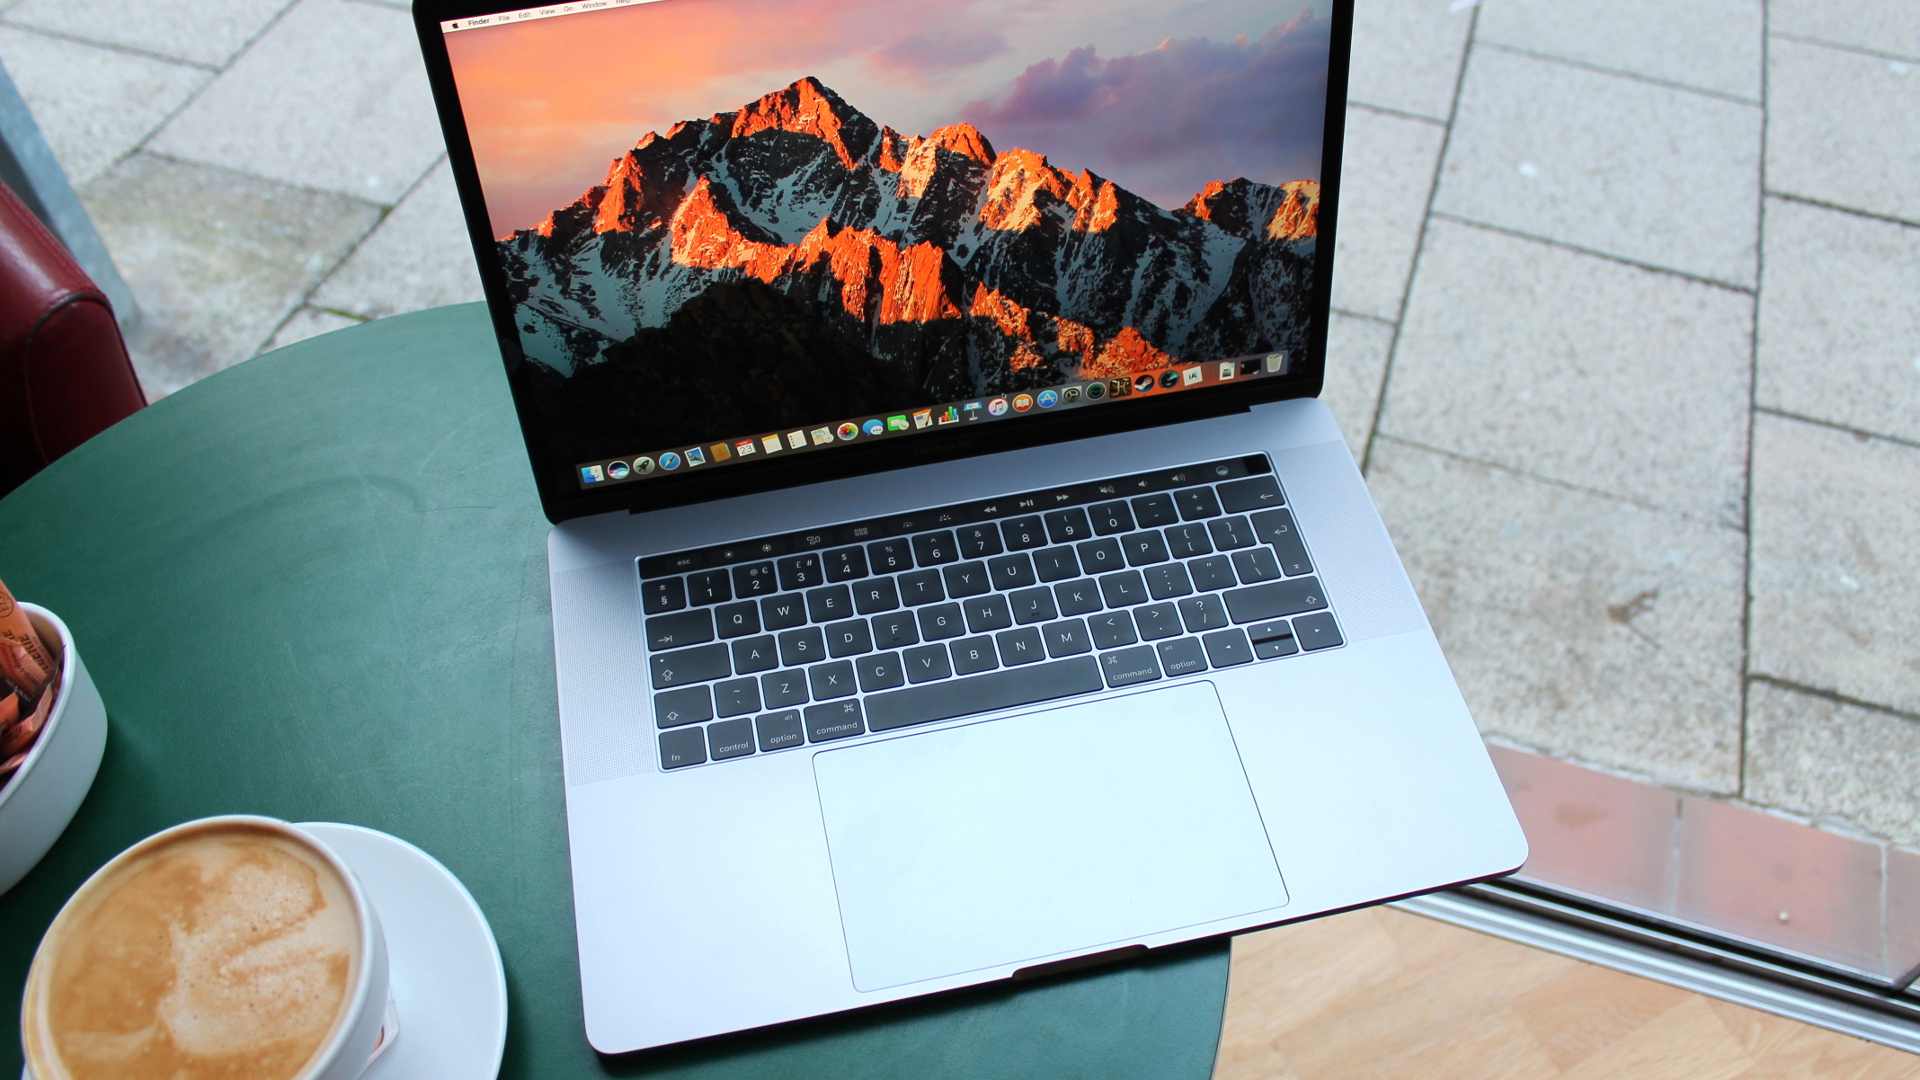 15-inch MacBook Pro with Retina